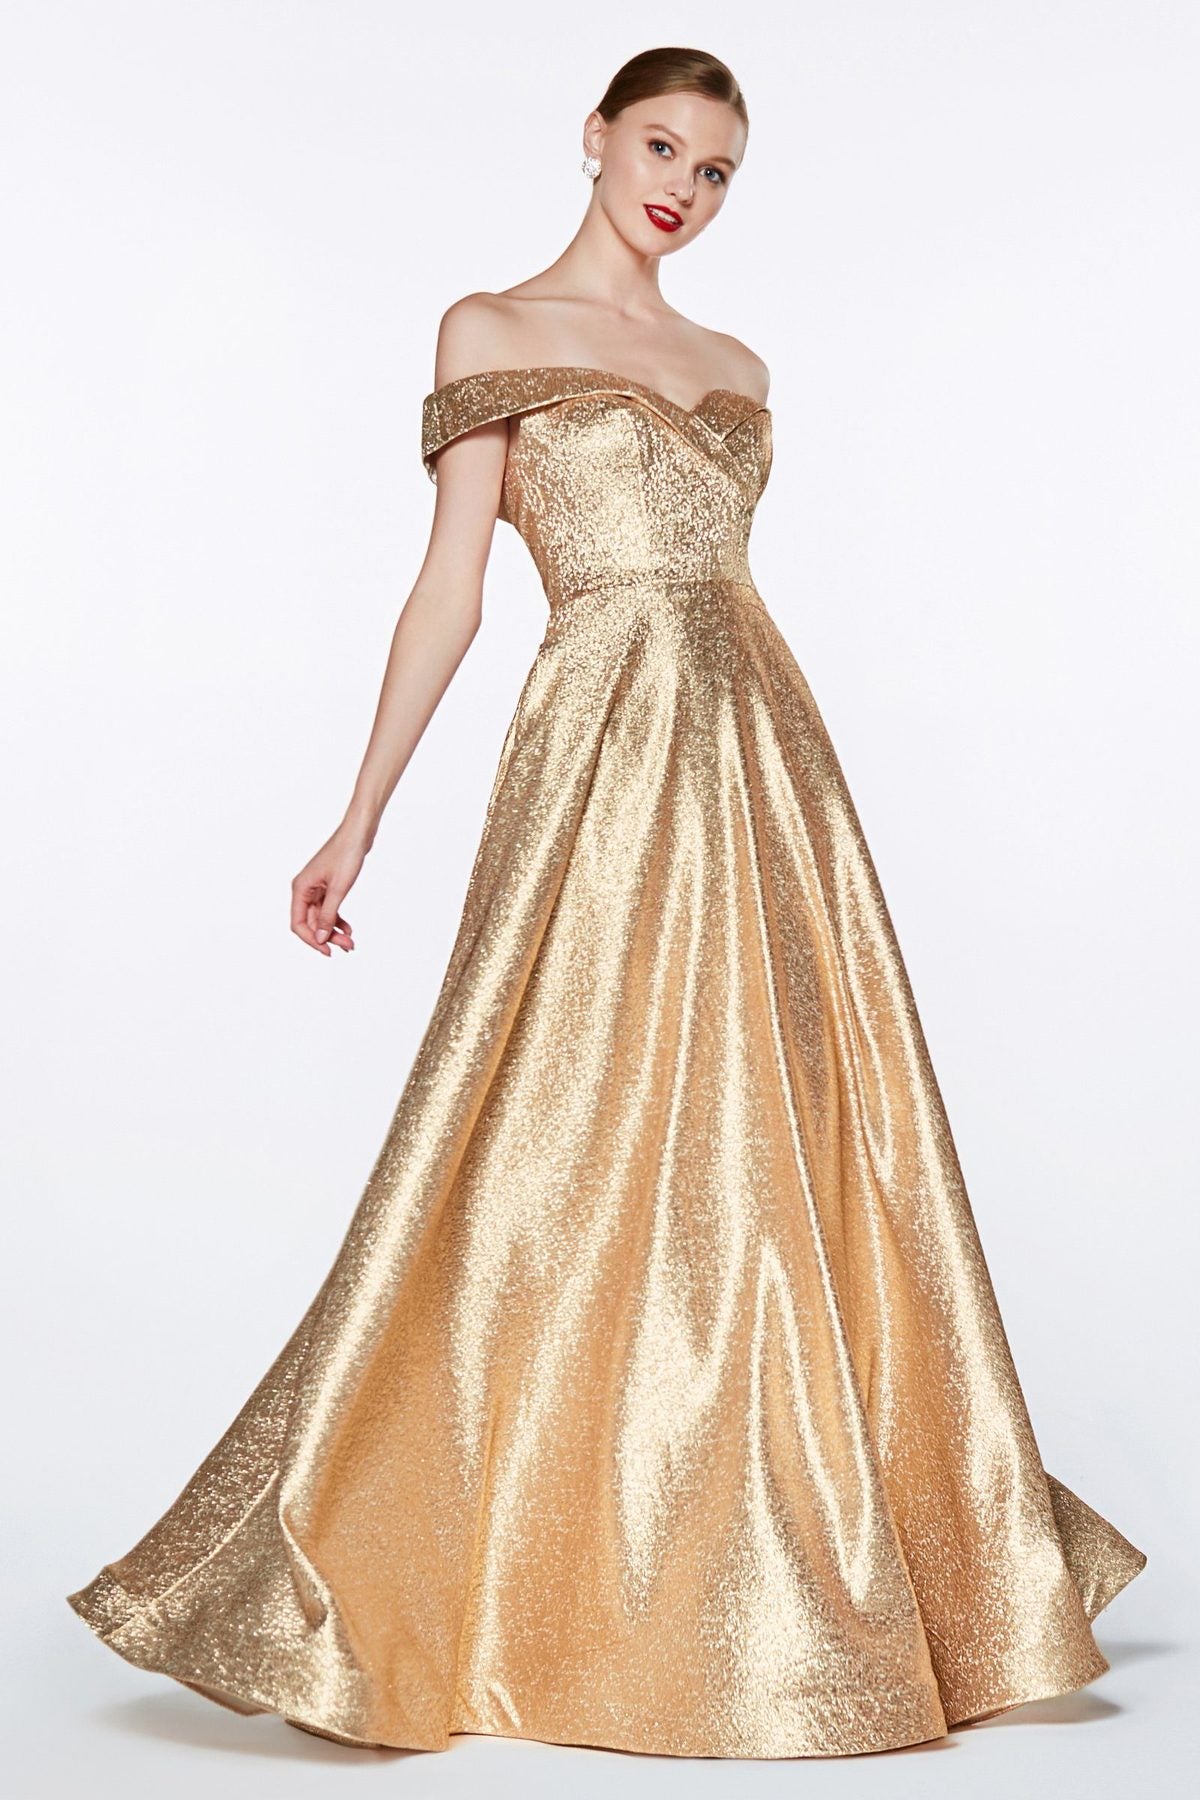 Glitter Belle Dress - iBESTEST.com